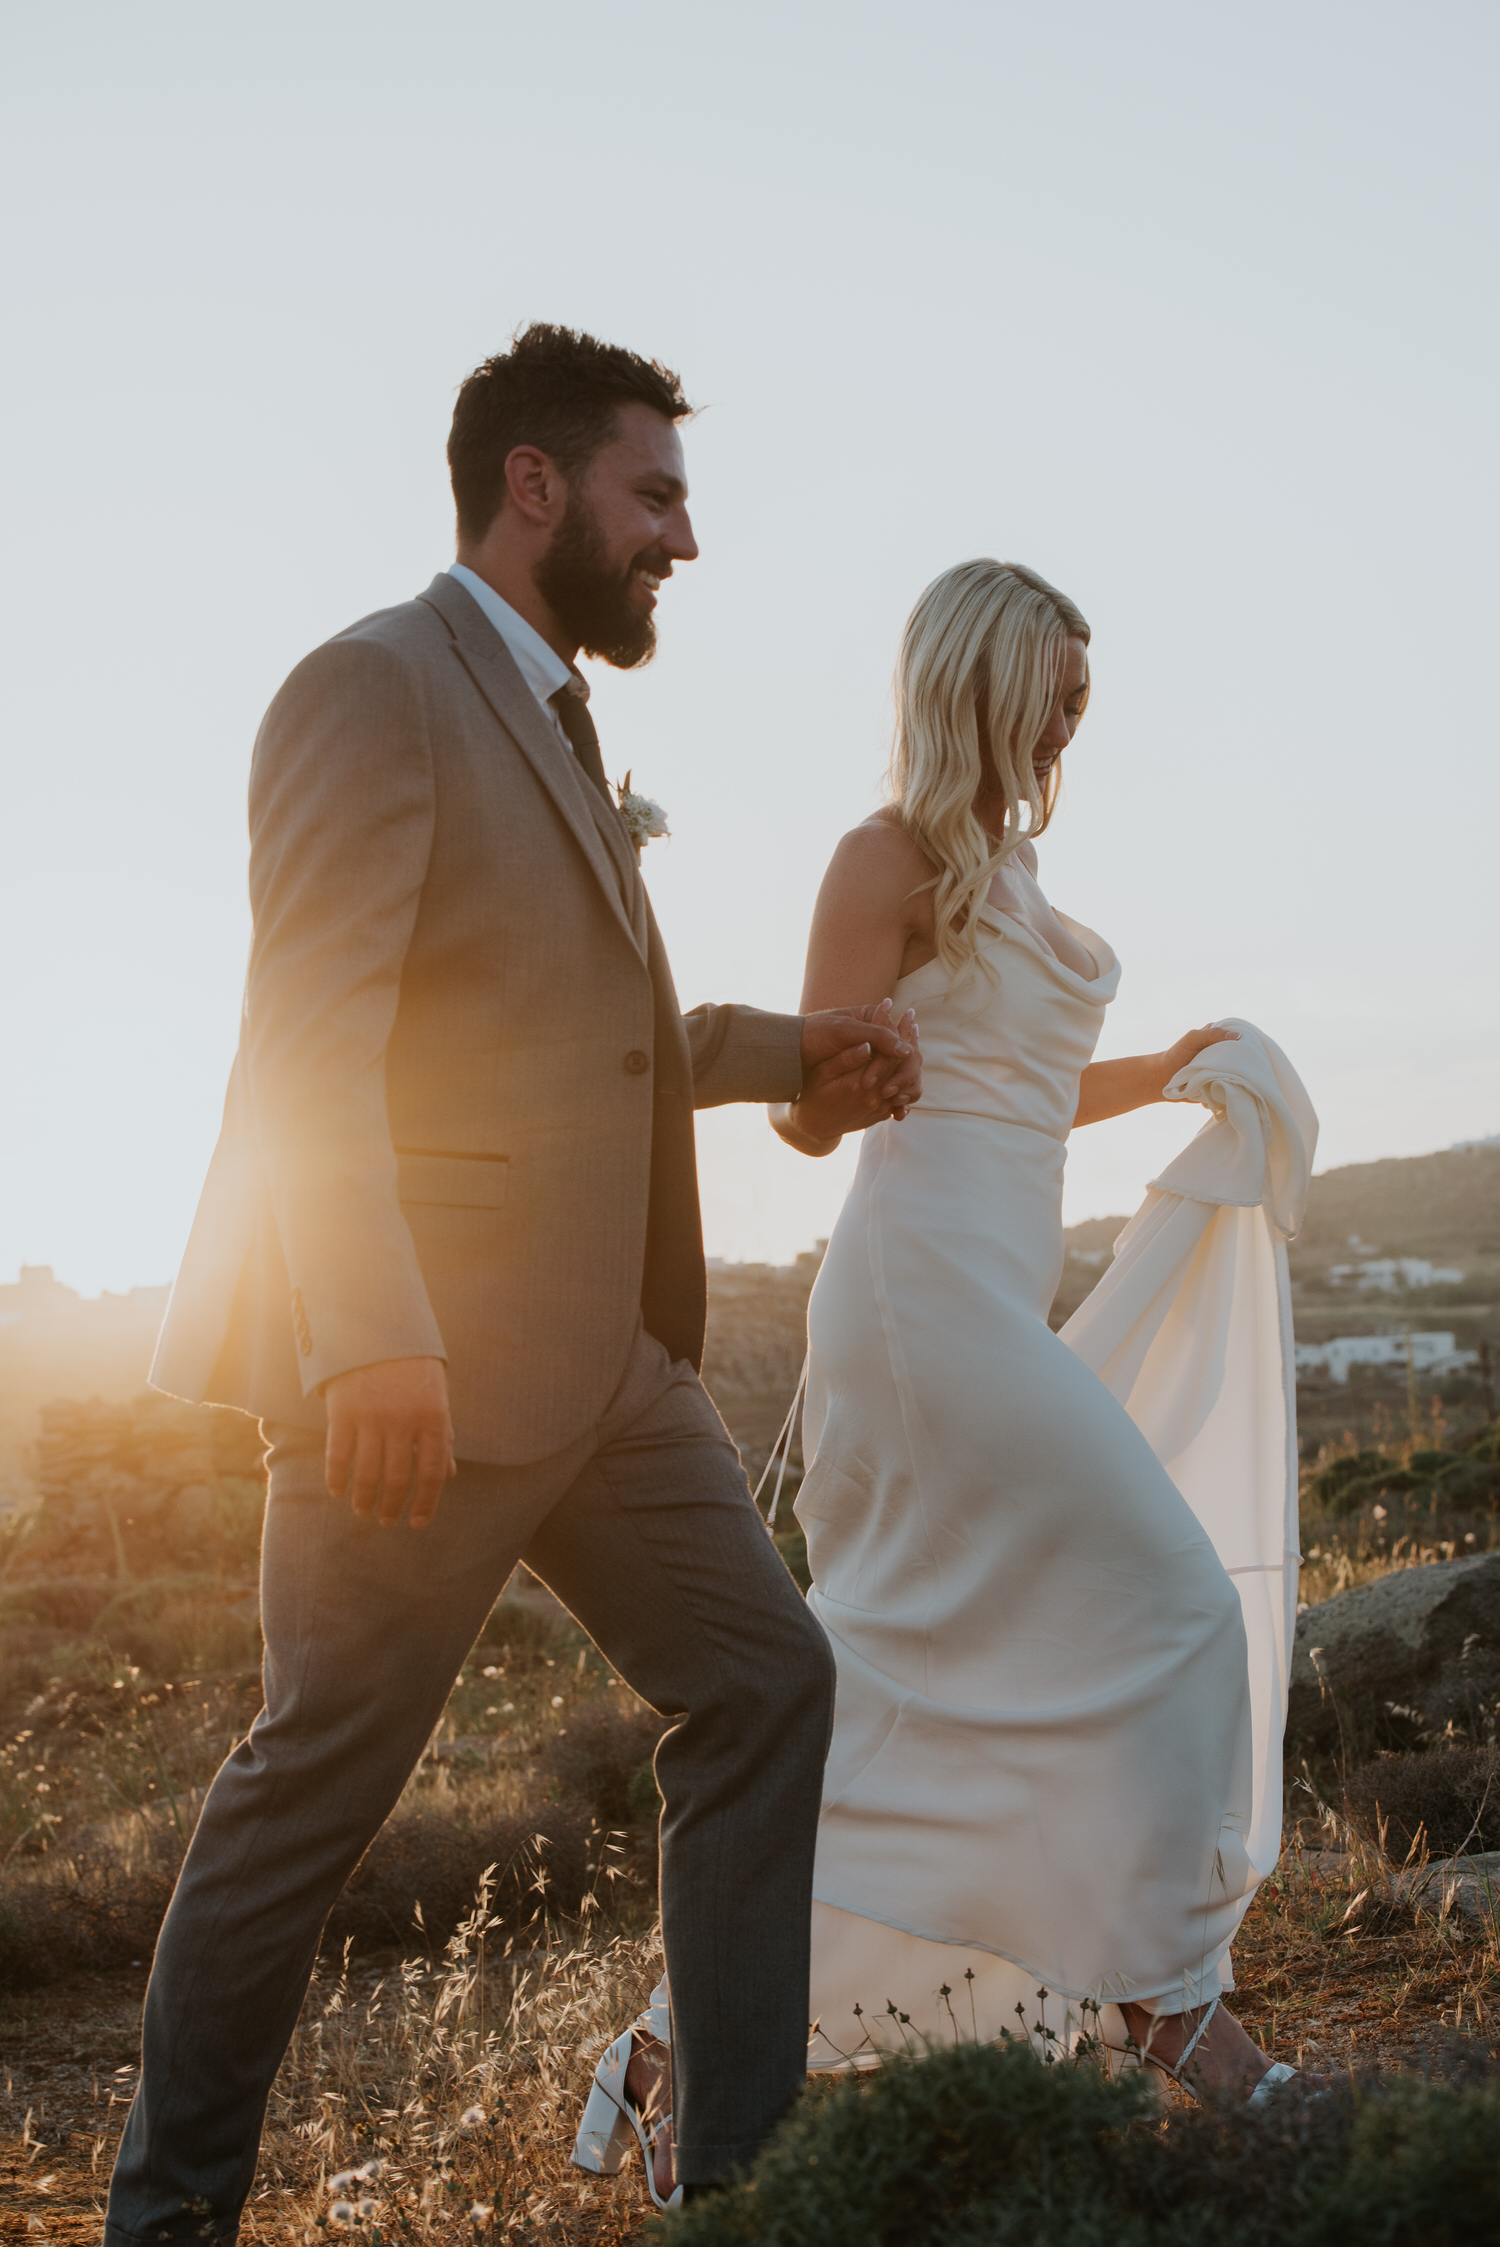 Mykonos wedding photographer: bride and groom walking through grassy field in beautiful golden light.